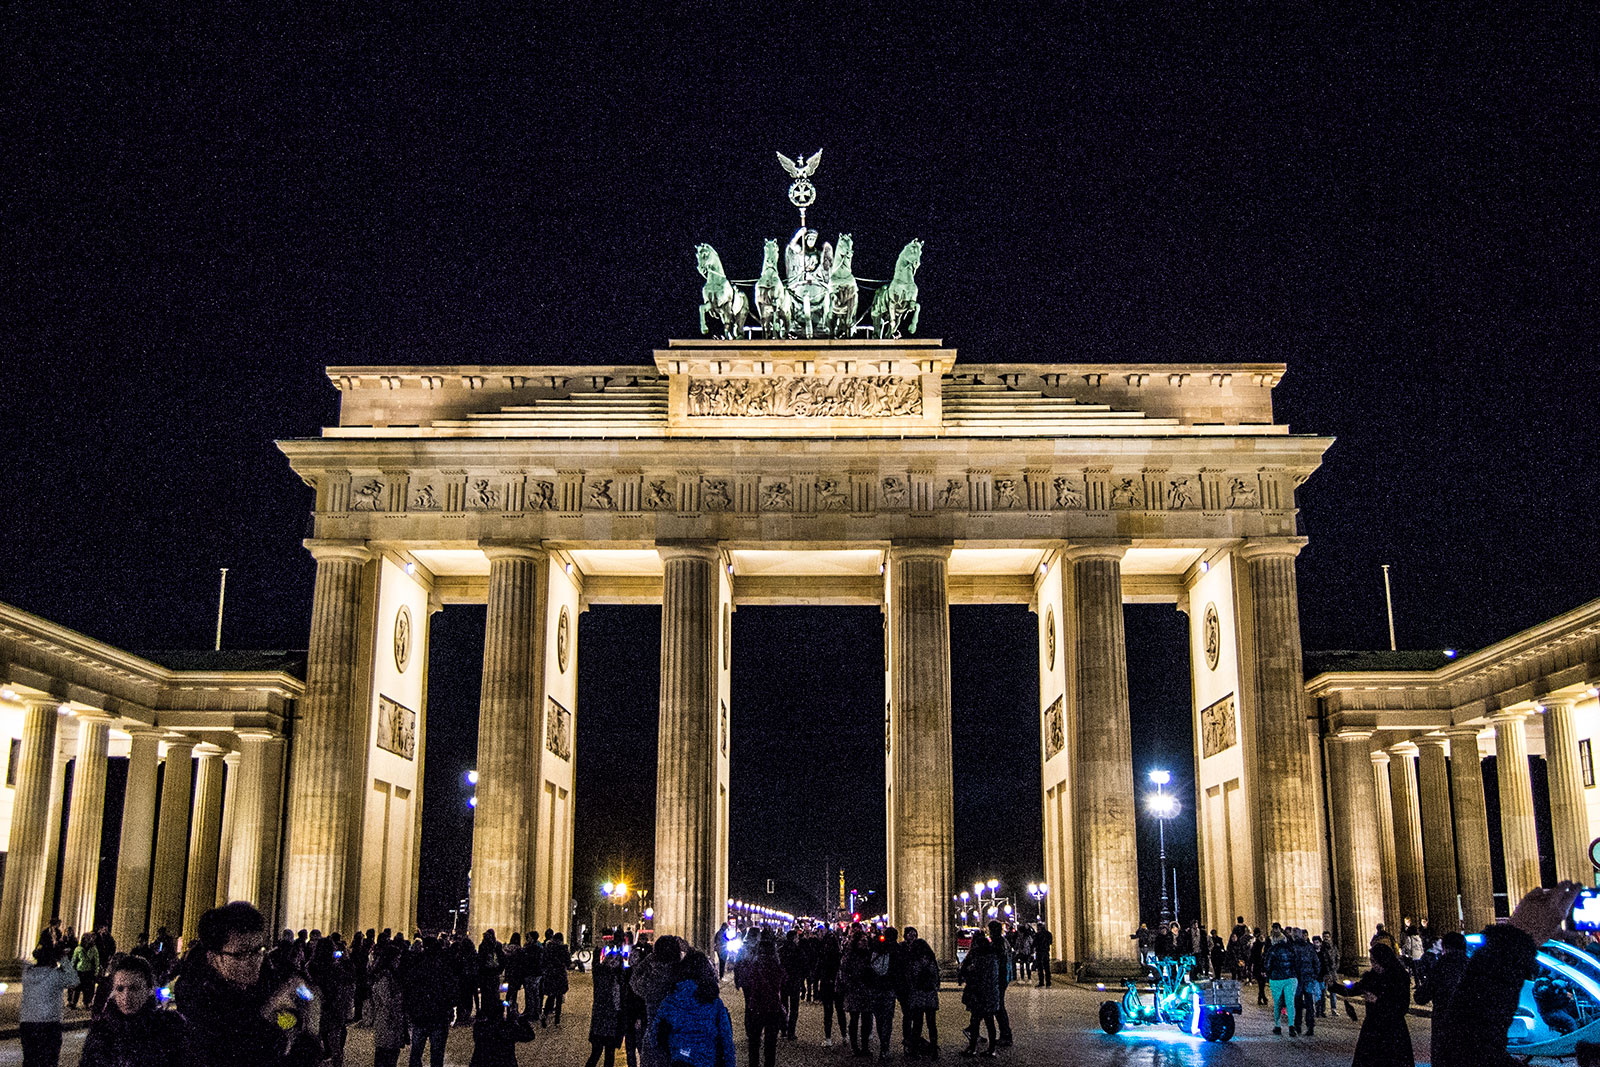 Puerta de Brandemburgo de noche - día 3 en Berlín